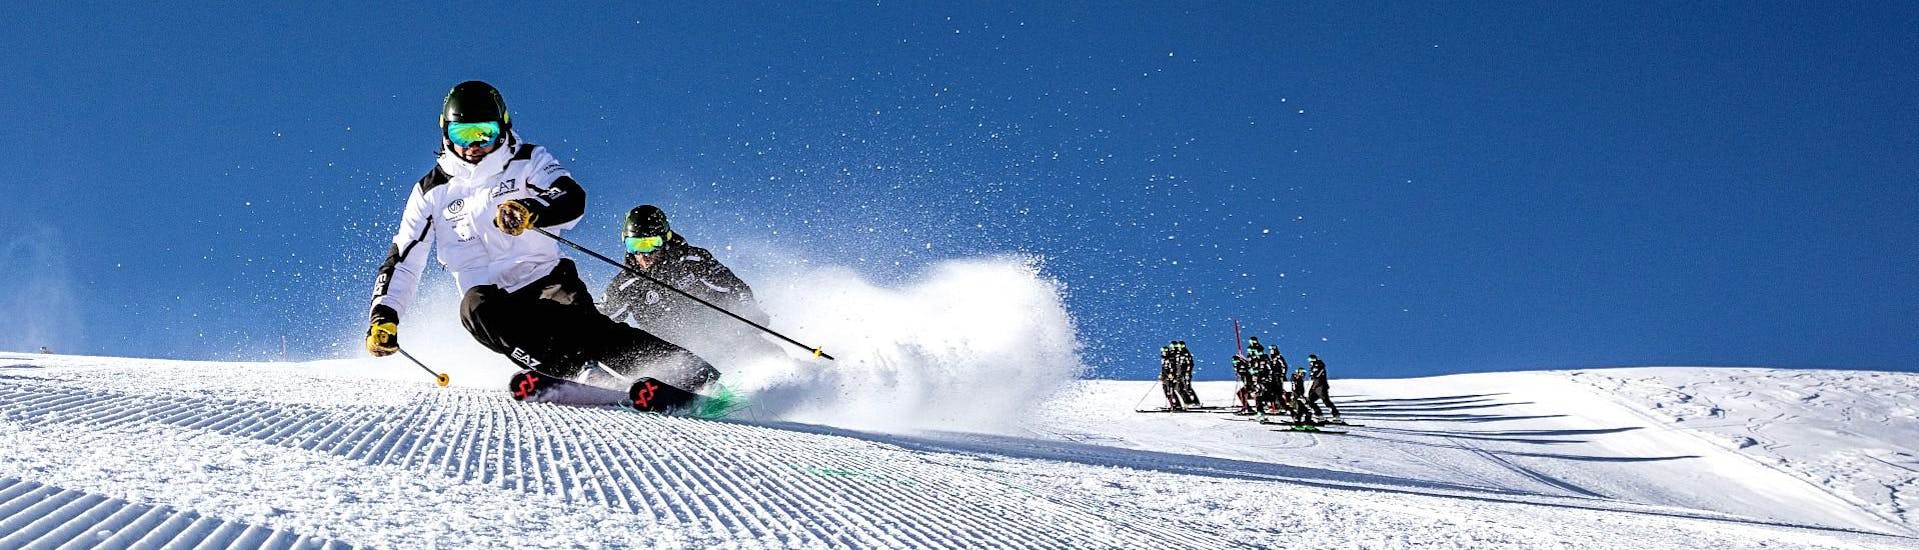 ski-lessons-for-teensadults-for-advanced-skiers-weekend-giorgio-rocca-ski-academy-stmoritz-hero